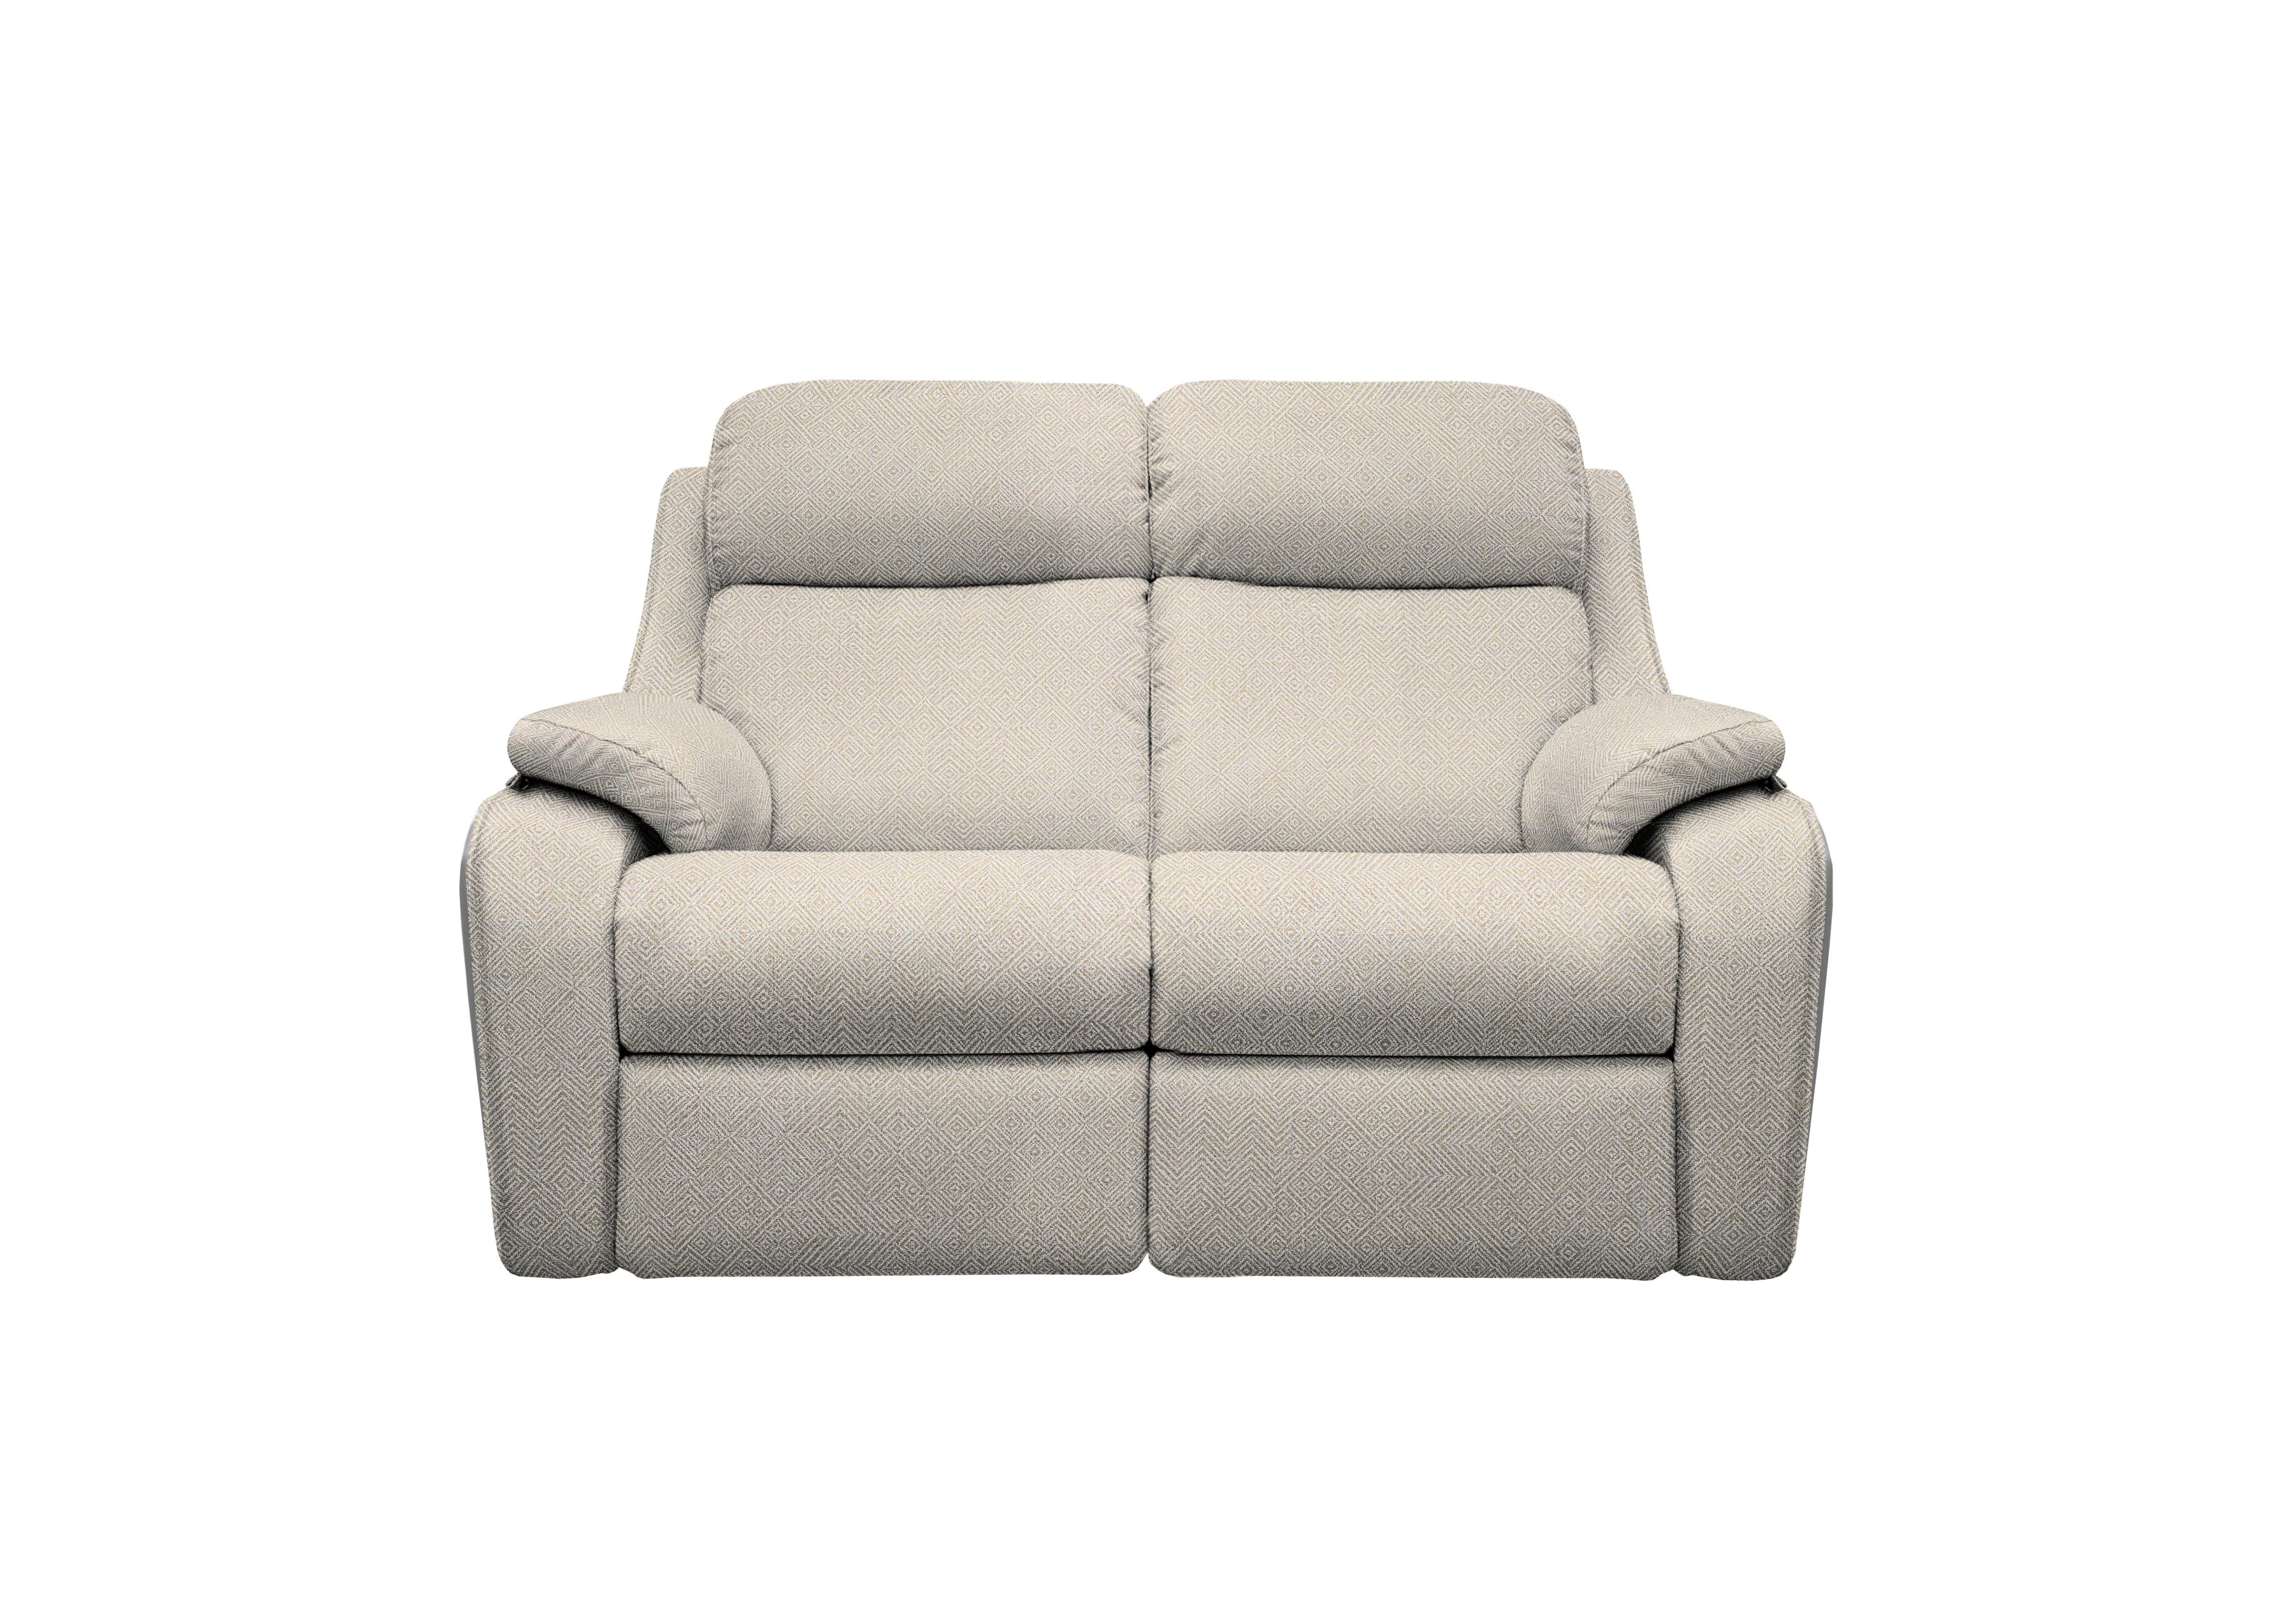 Kingsbury 2 Seater Fabric Sofa in B011 Nebular Blush on Furniture Village